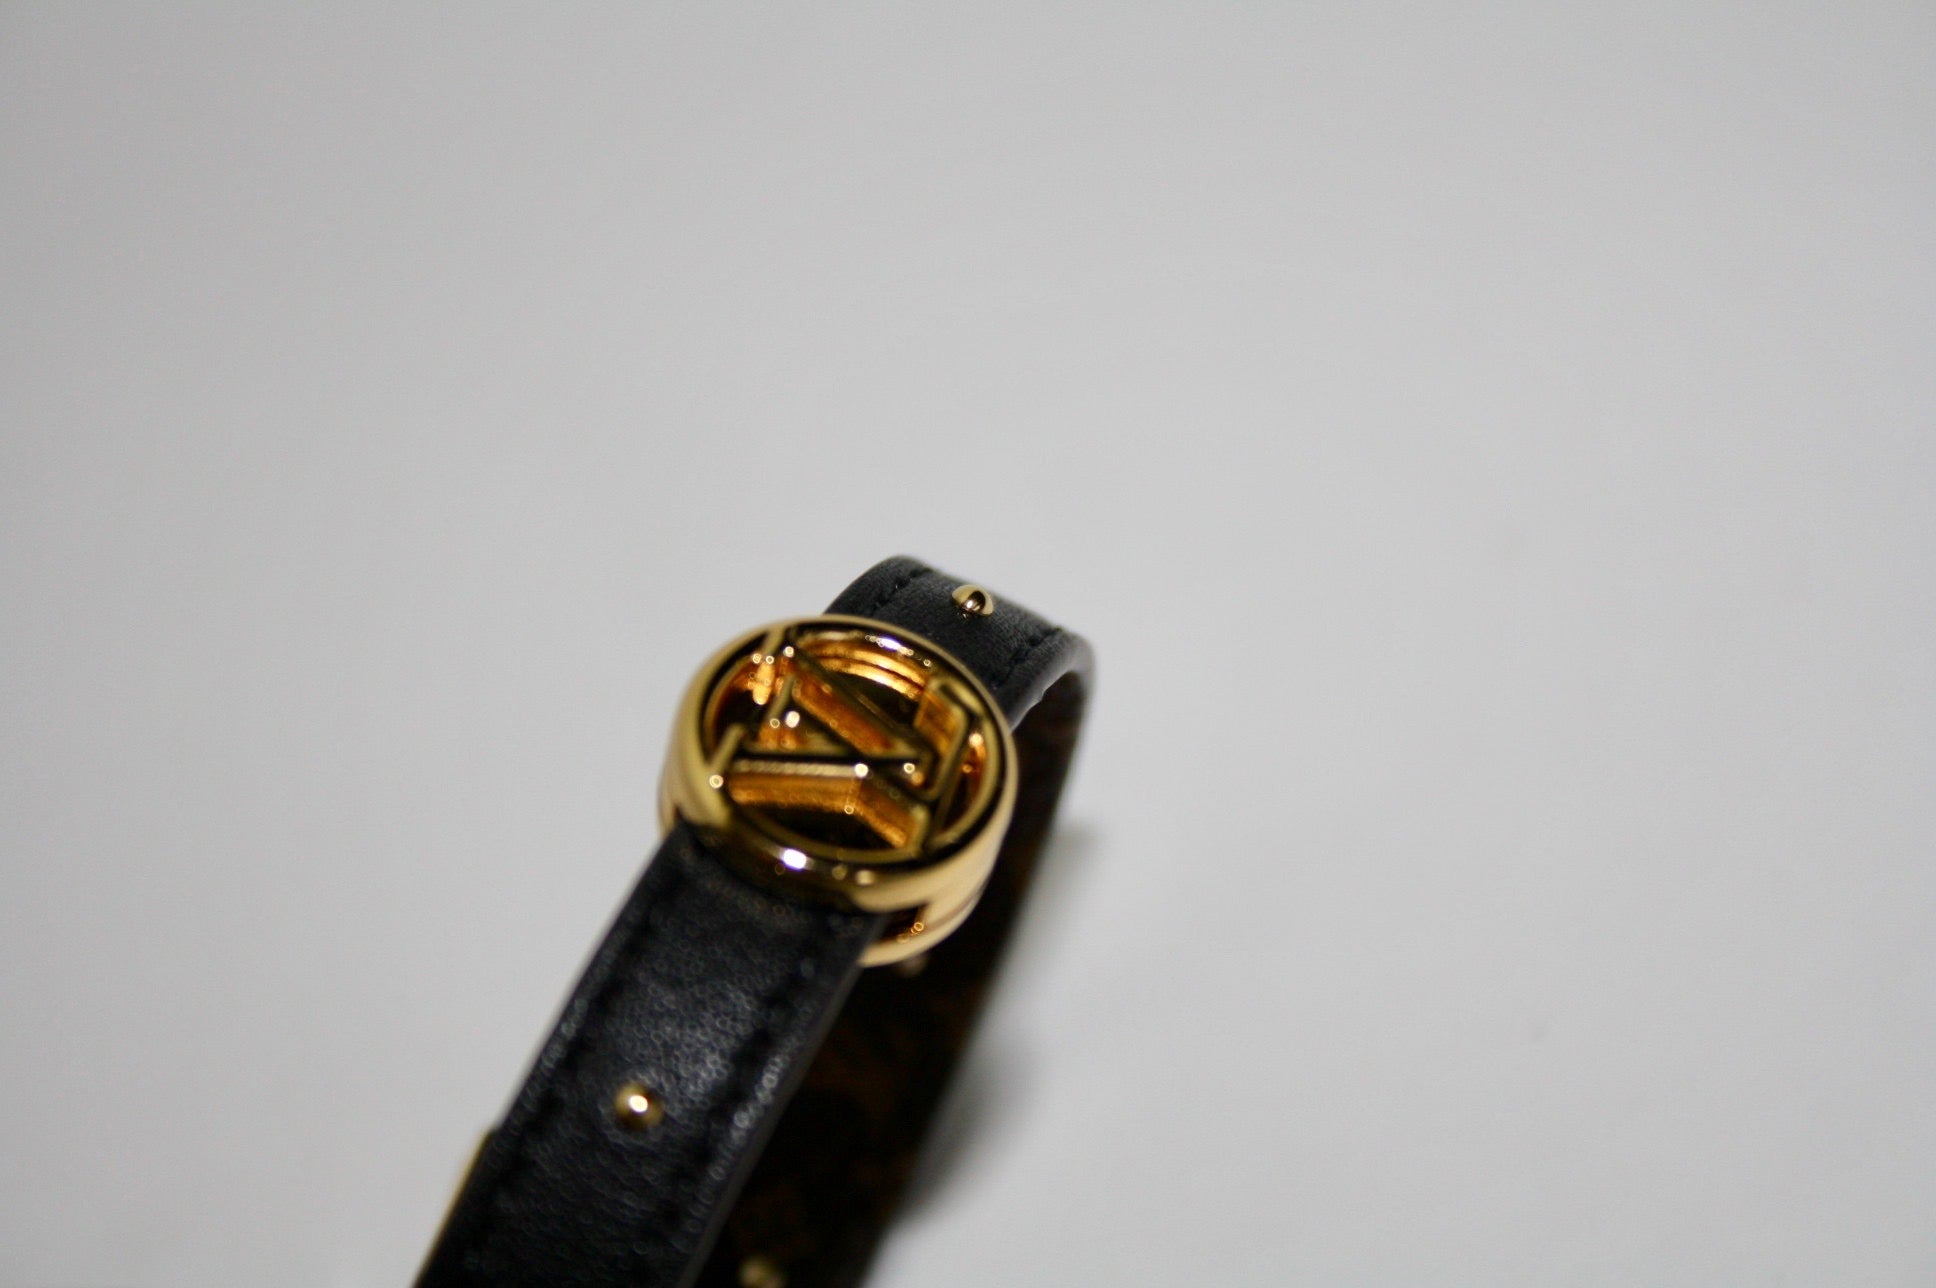 Lv Prism Mini 14mm Reversible Bracelet